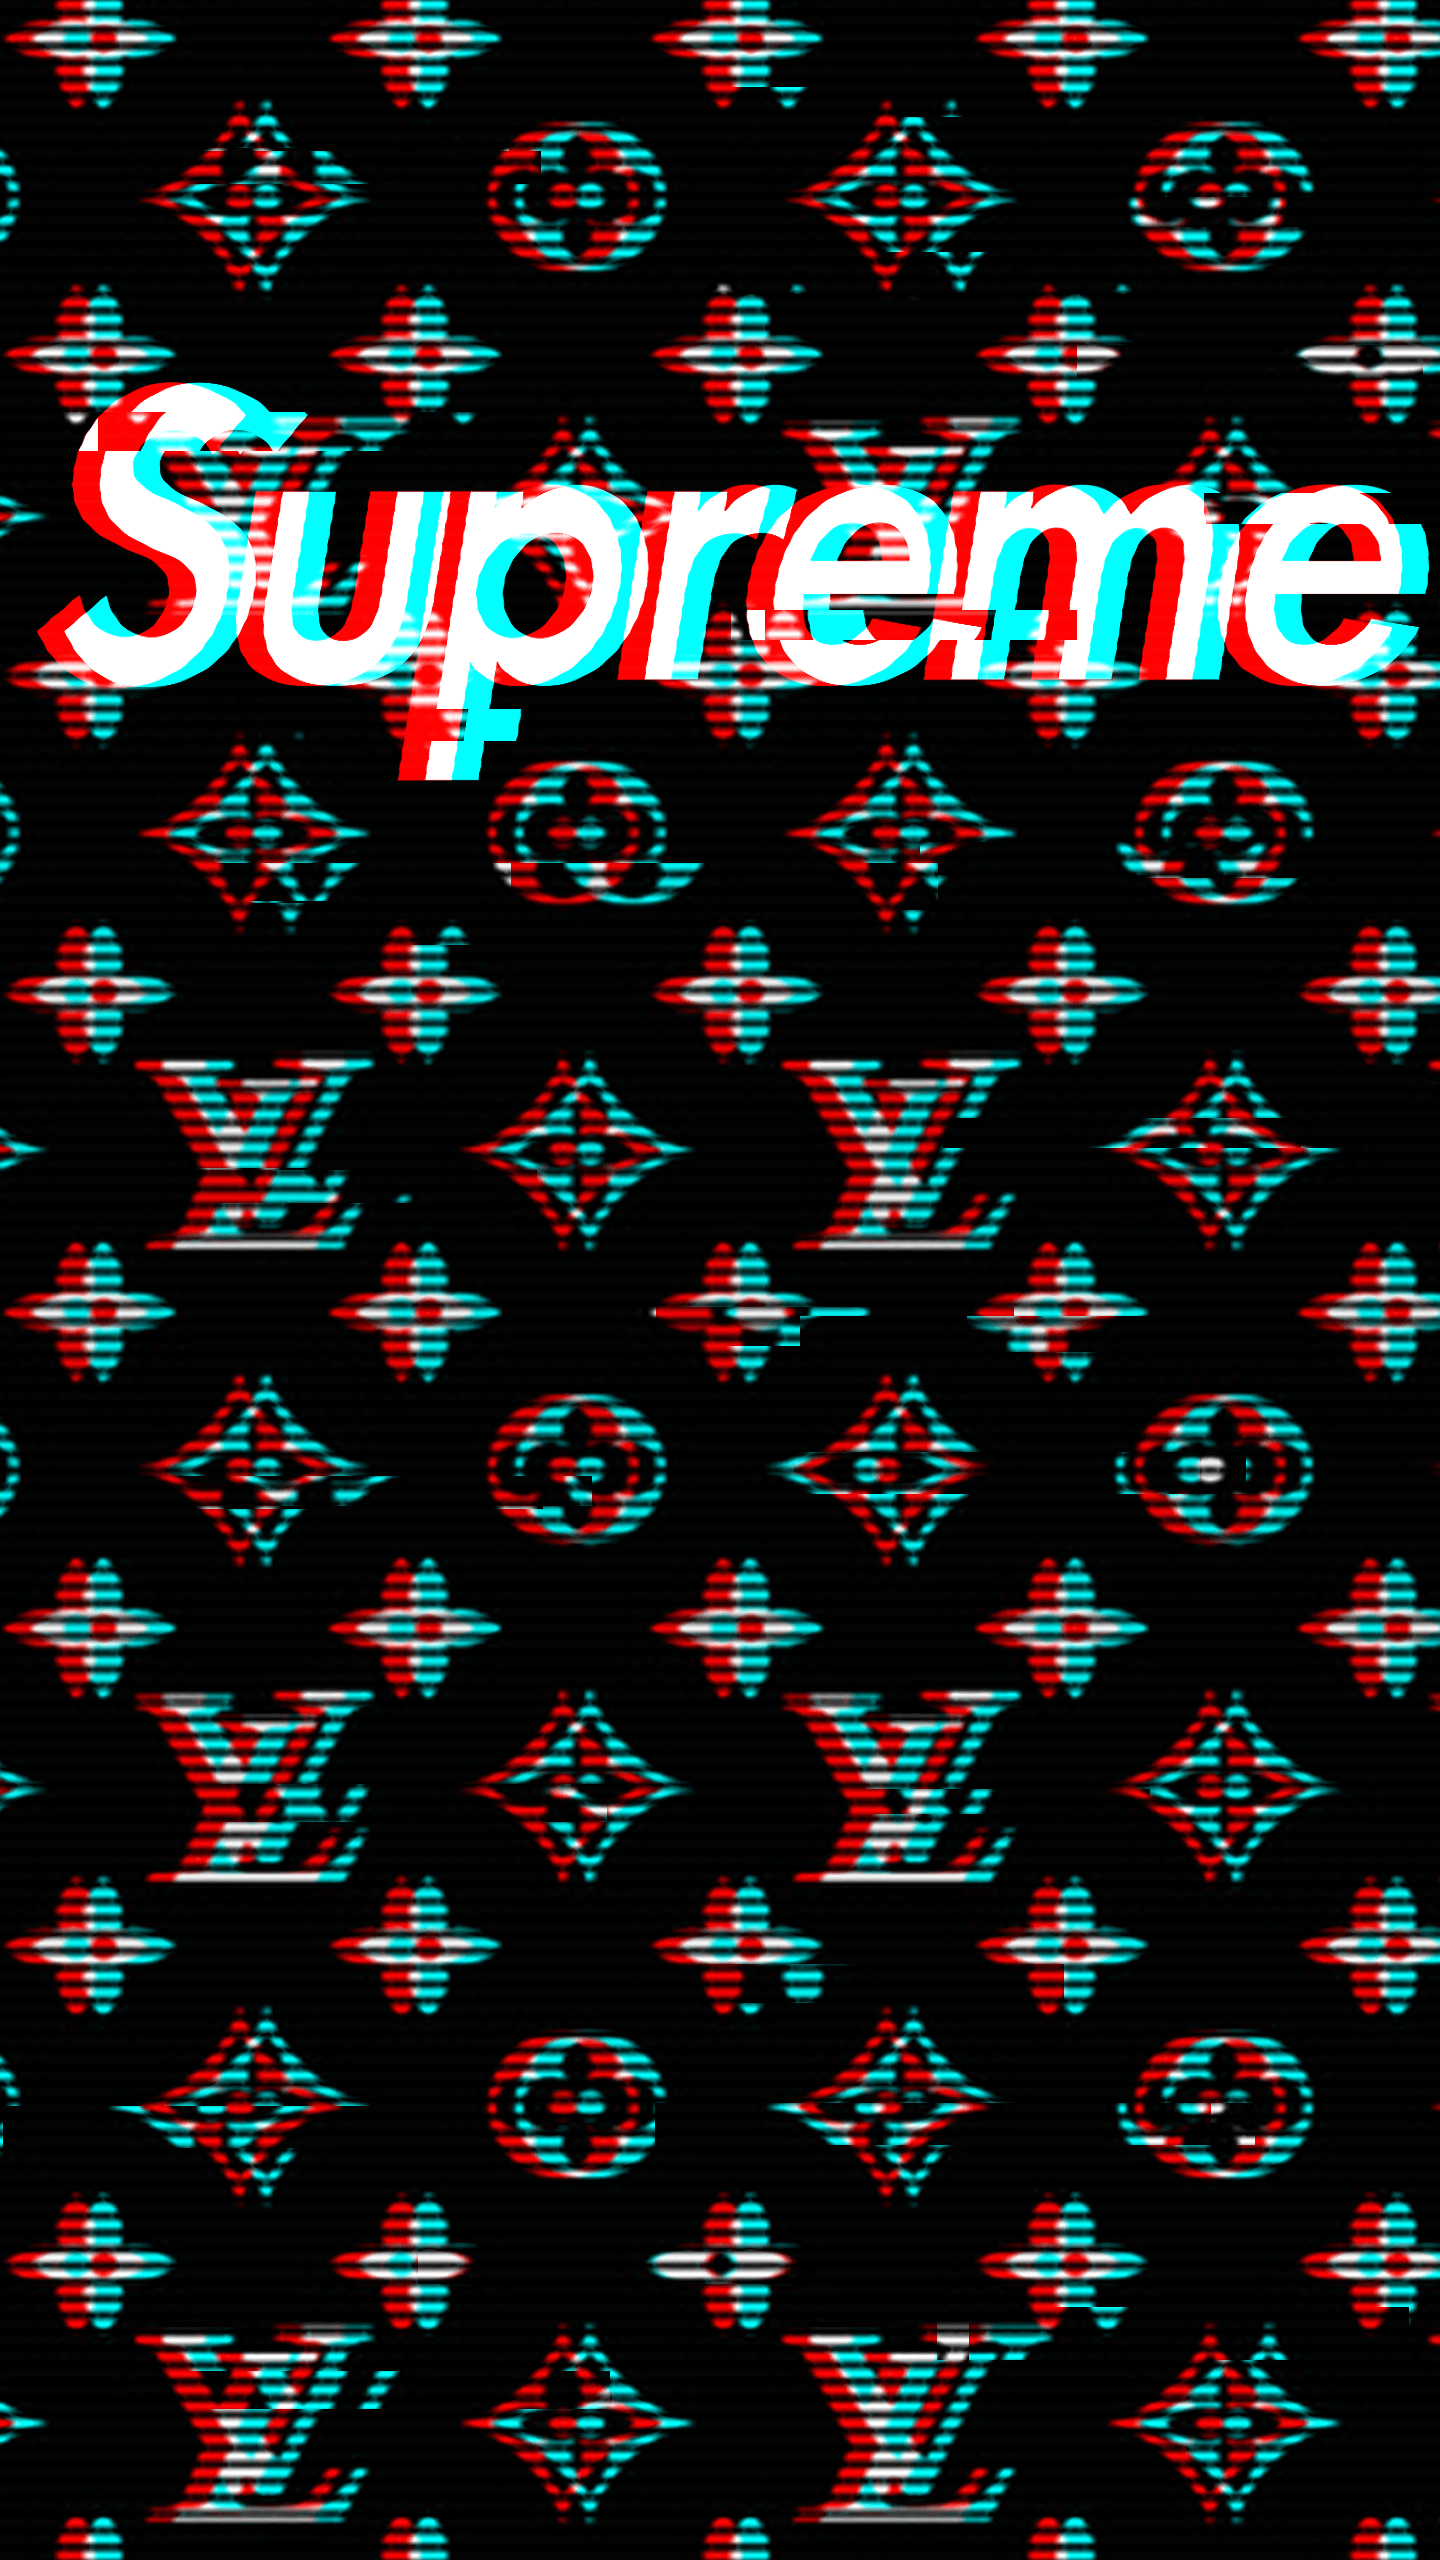 Red Louis Vuitton Supreme Wallpapers on WallpaperDog